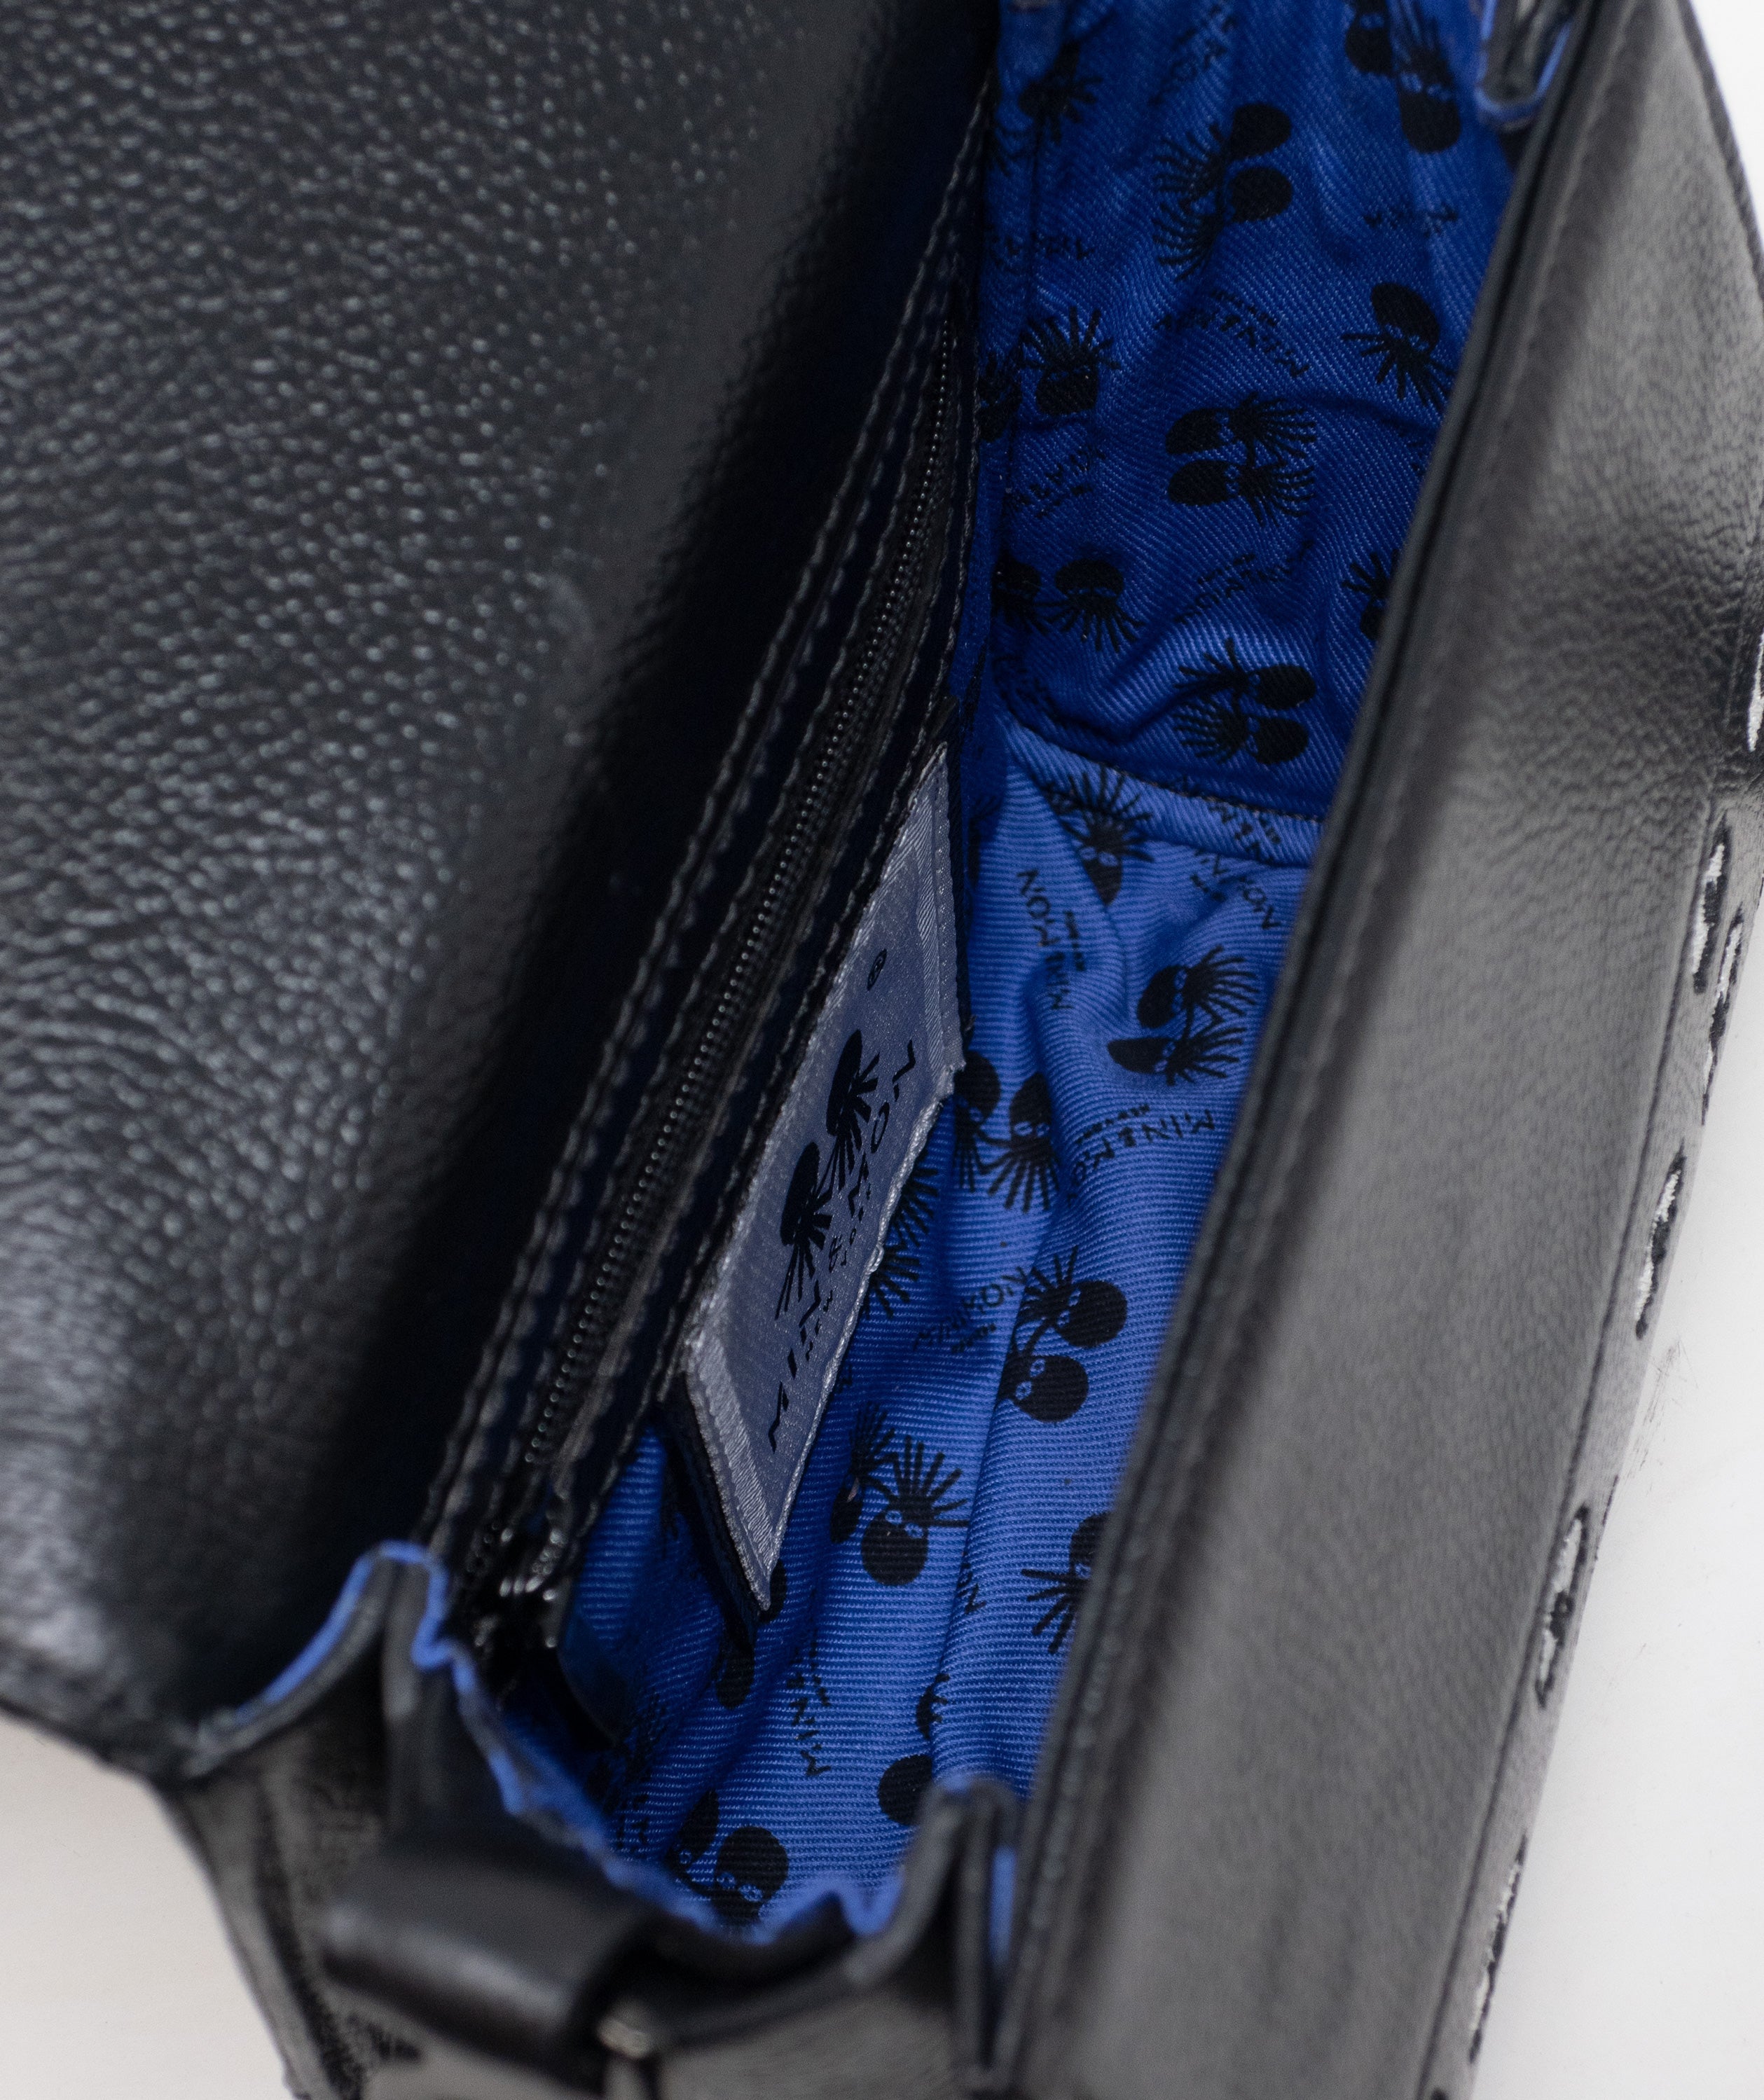 Anastasio Micro Crossbody Handbag Black Leather - Eyes Embroidery Print - Inside view